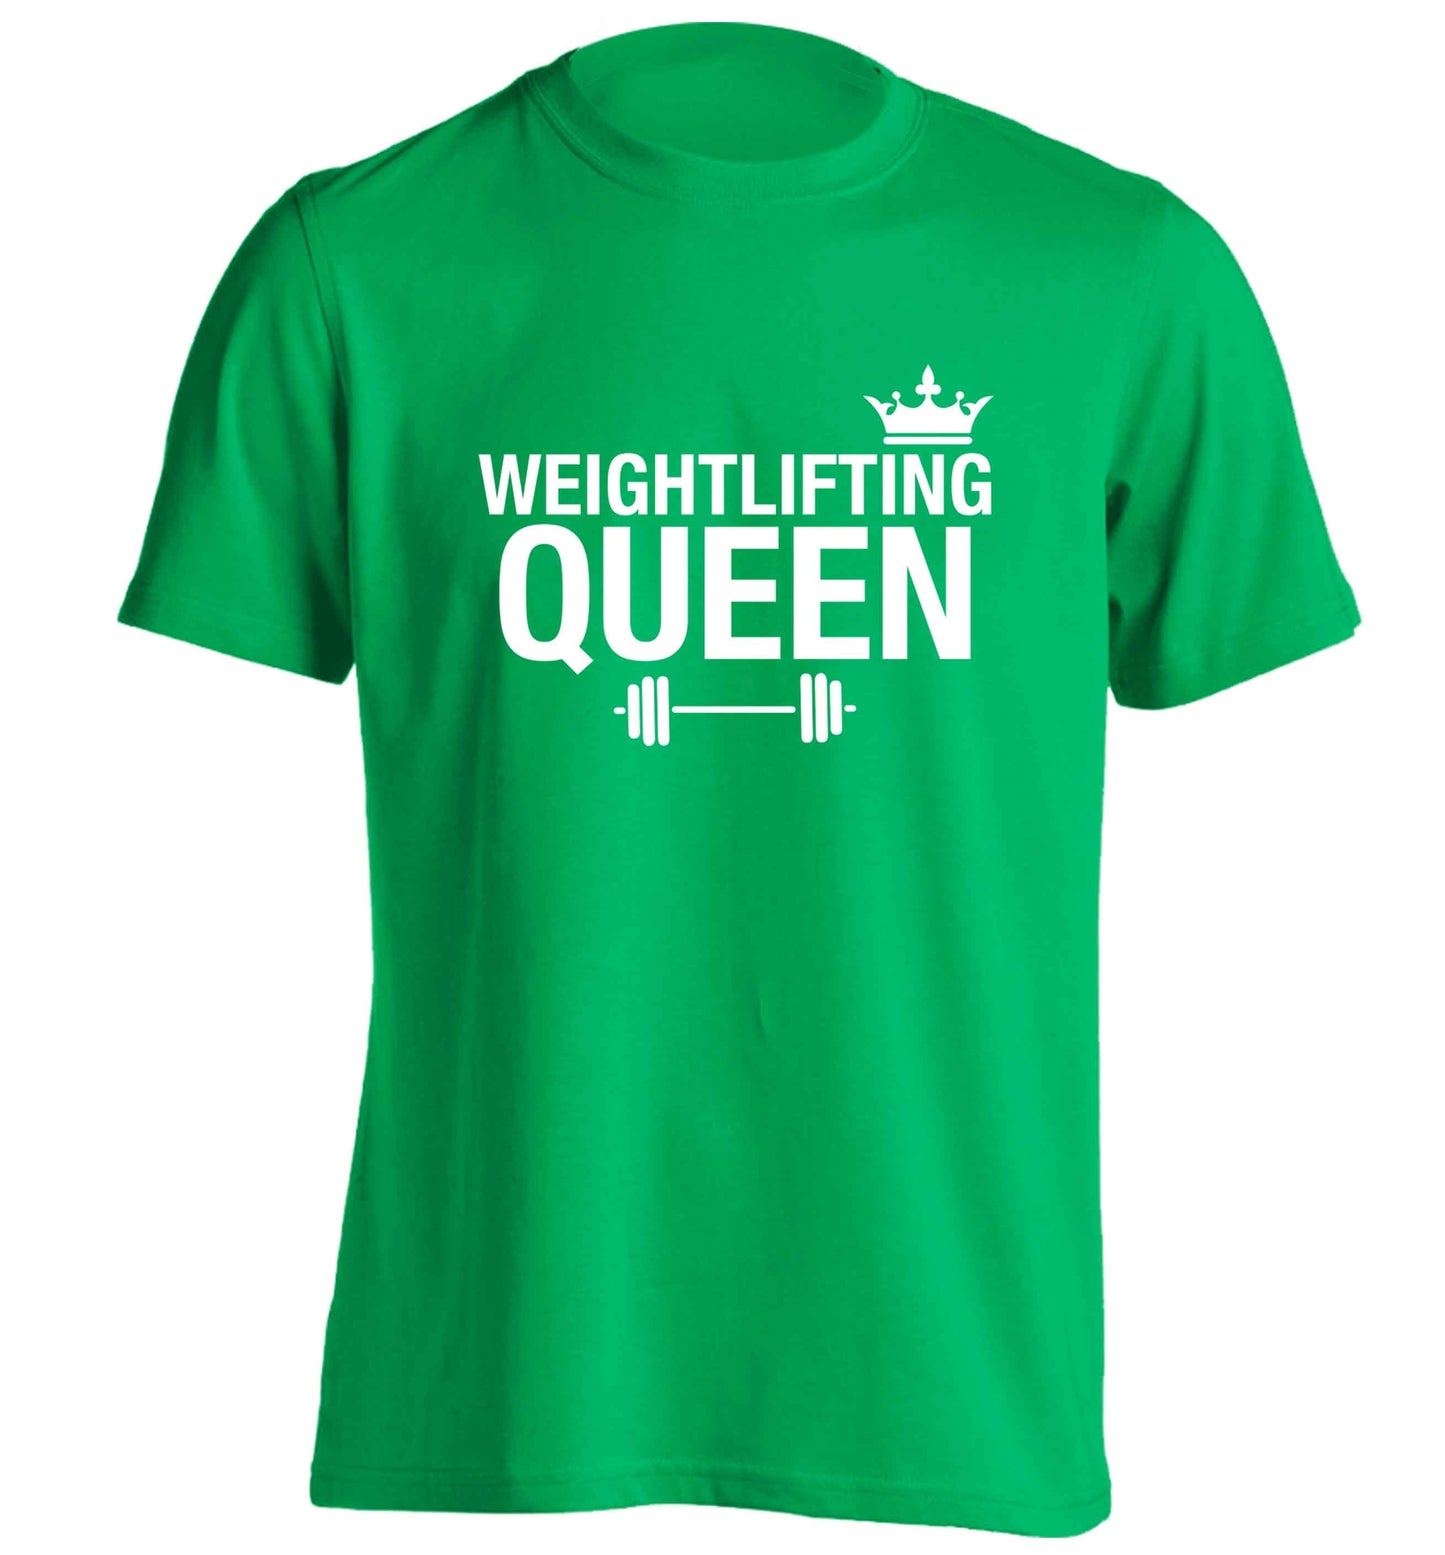 Weightlifting Queen adults unisex green Tshirt 2XL